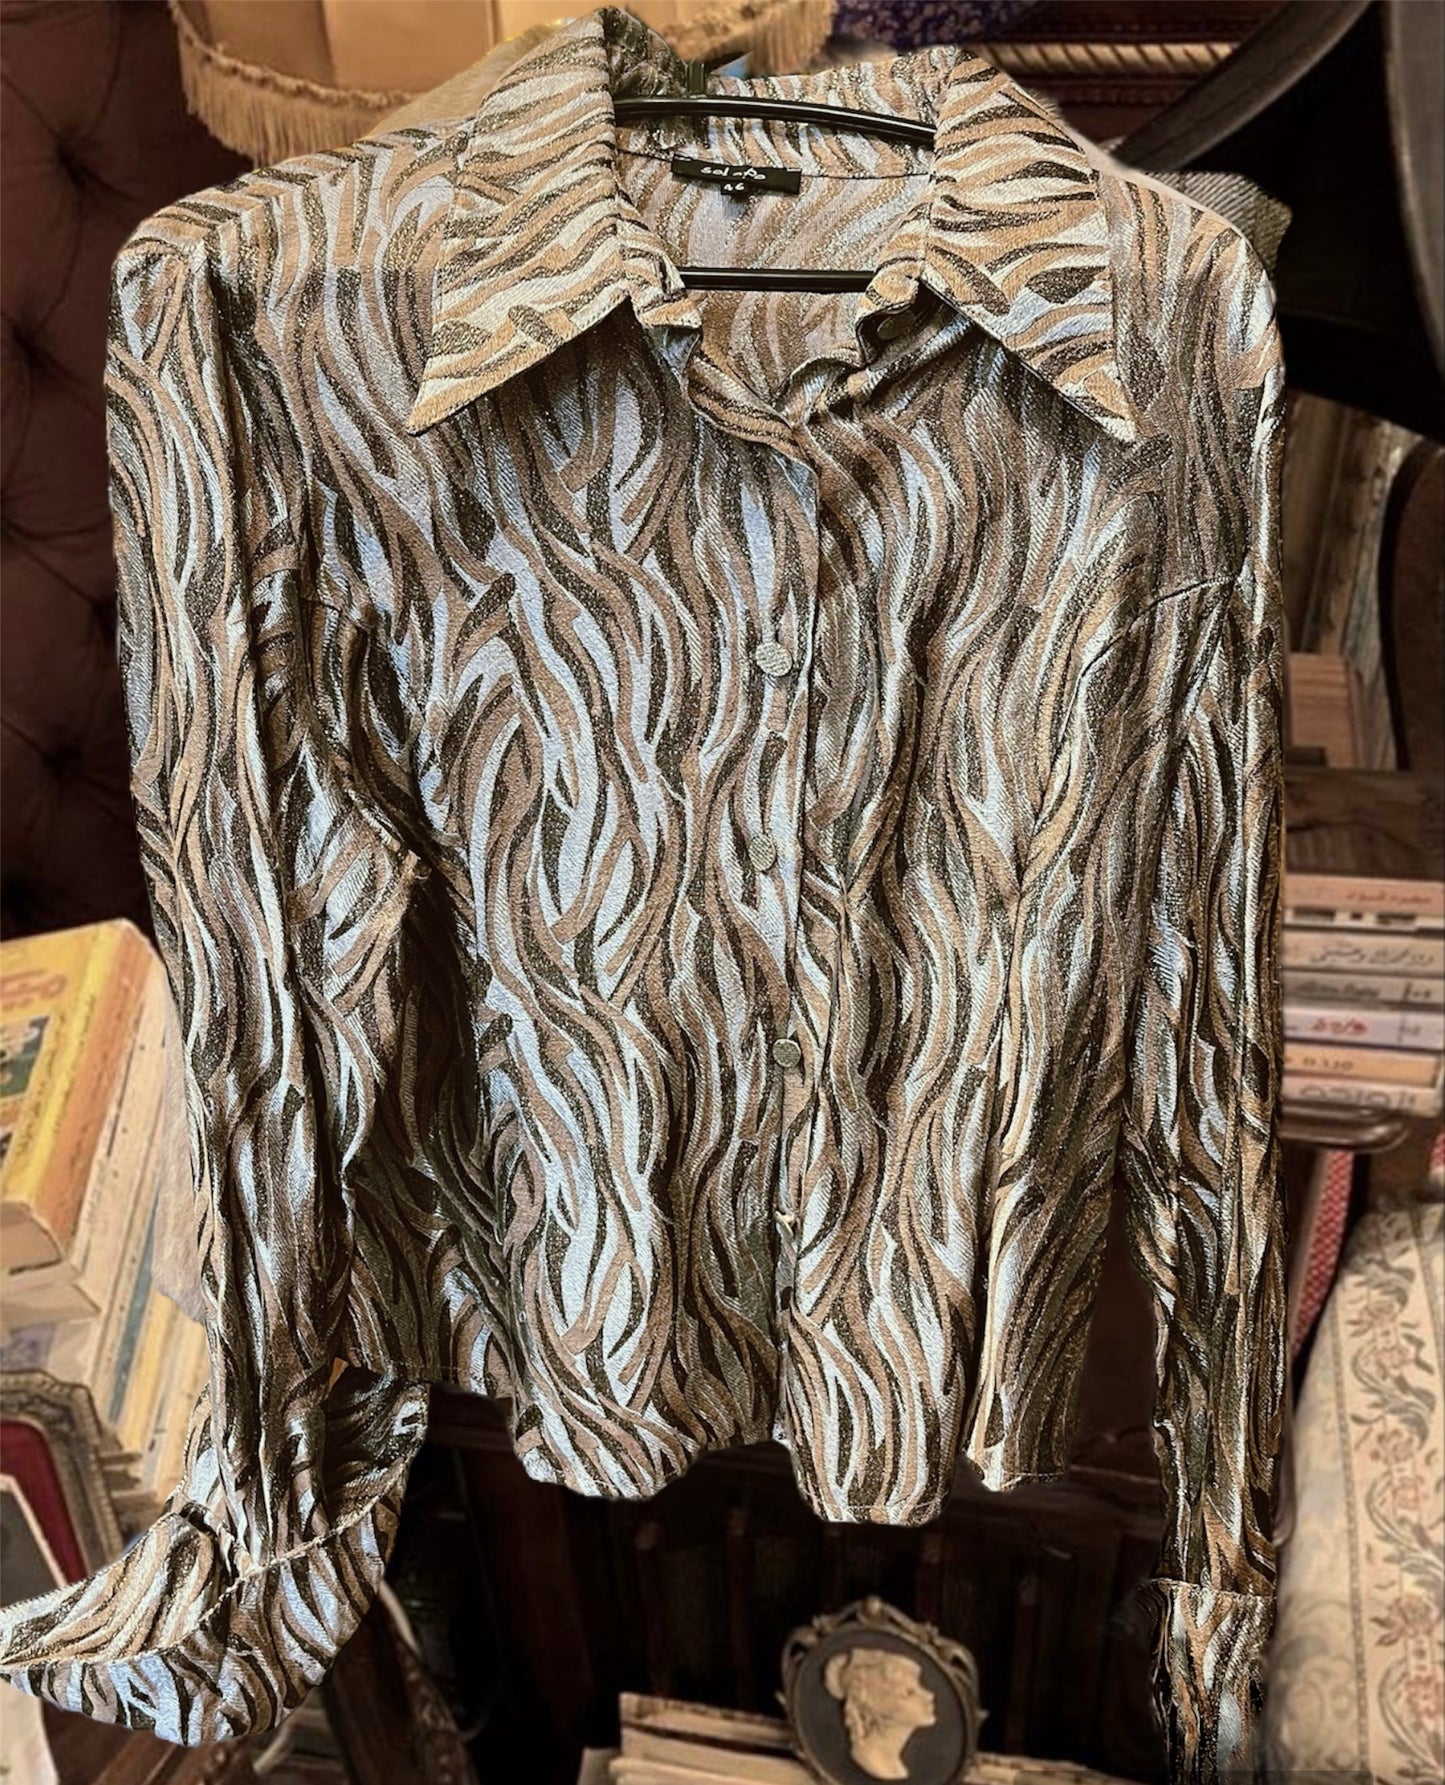 Vintage sparkling 70s button up shirt .Fits best S